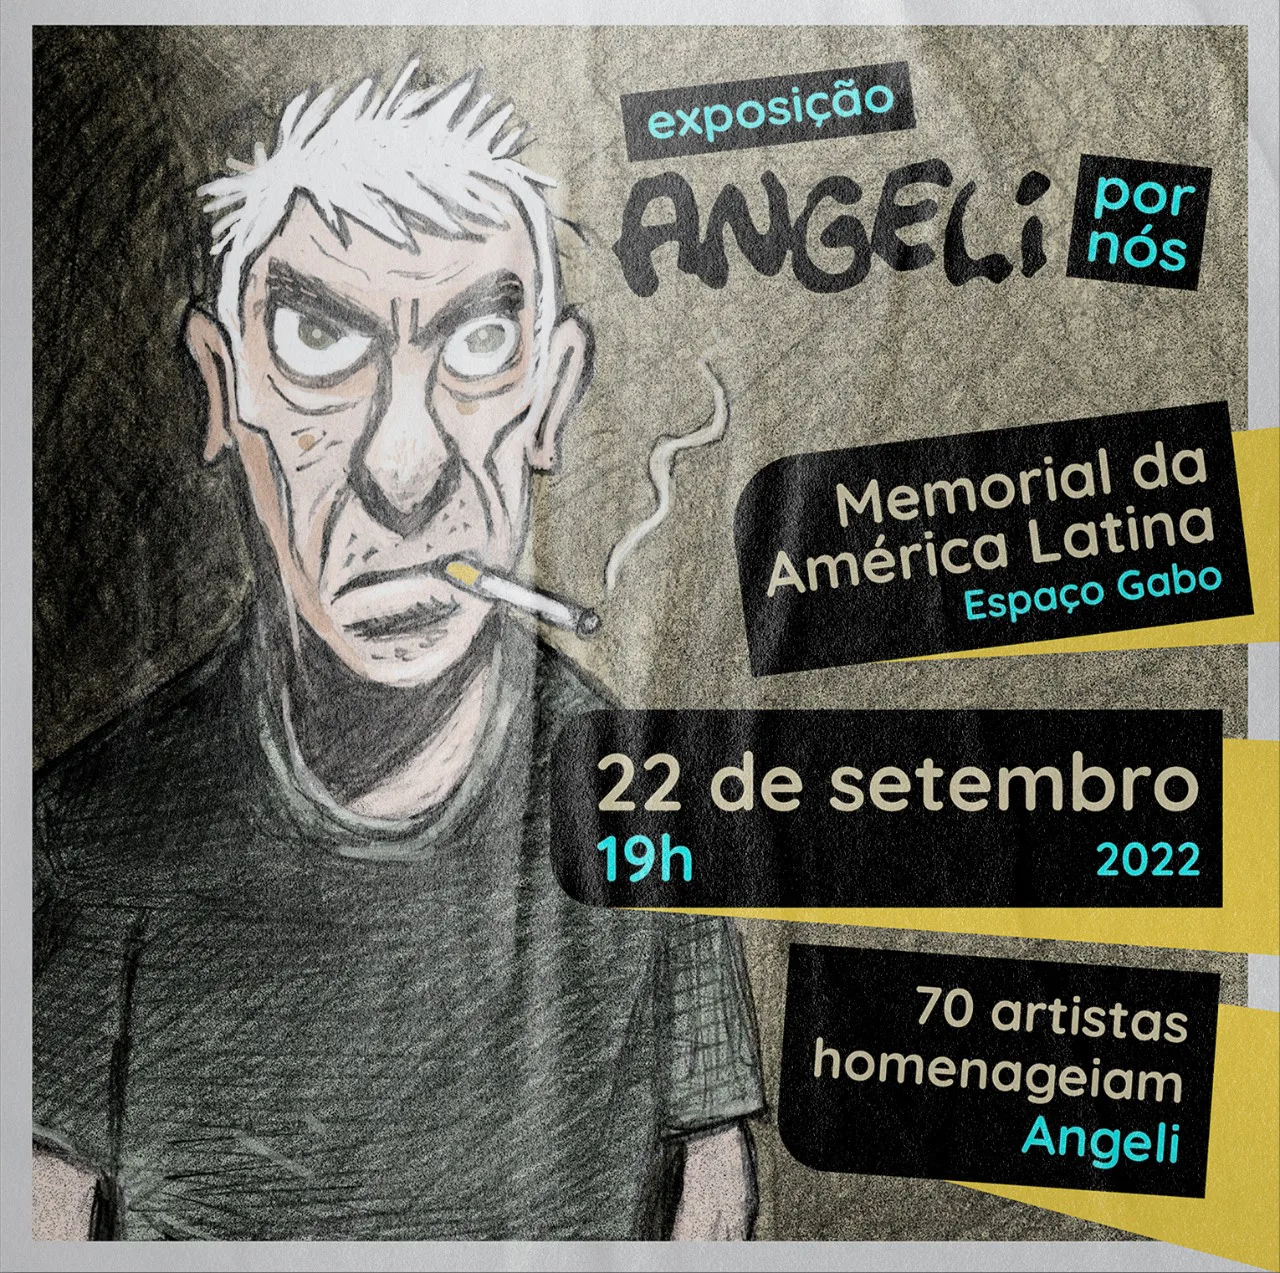 angeli-por-nos-exposicao-memorial-da-america-latina-sp